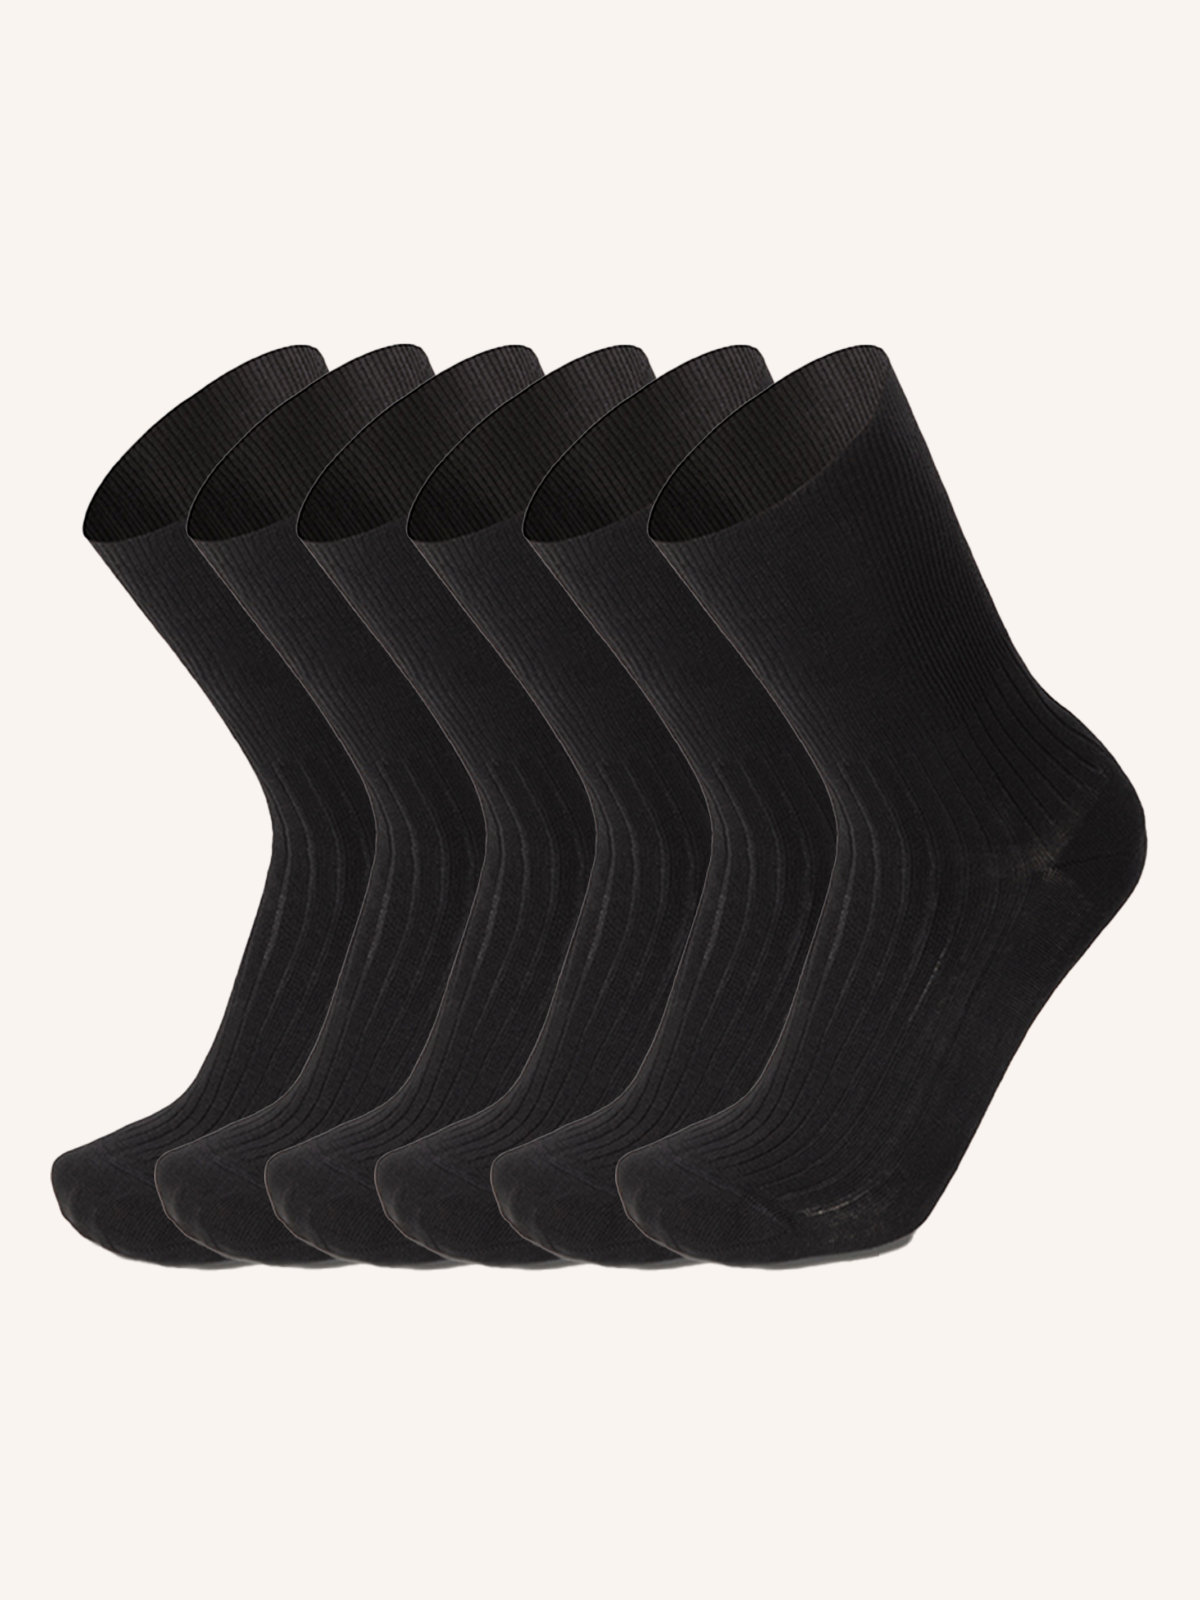 Short Sanitary Sock in Cotton for Men | Plain Color | Pack of 6 Pairs | Termosanital C